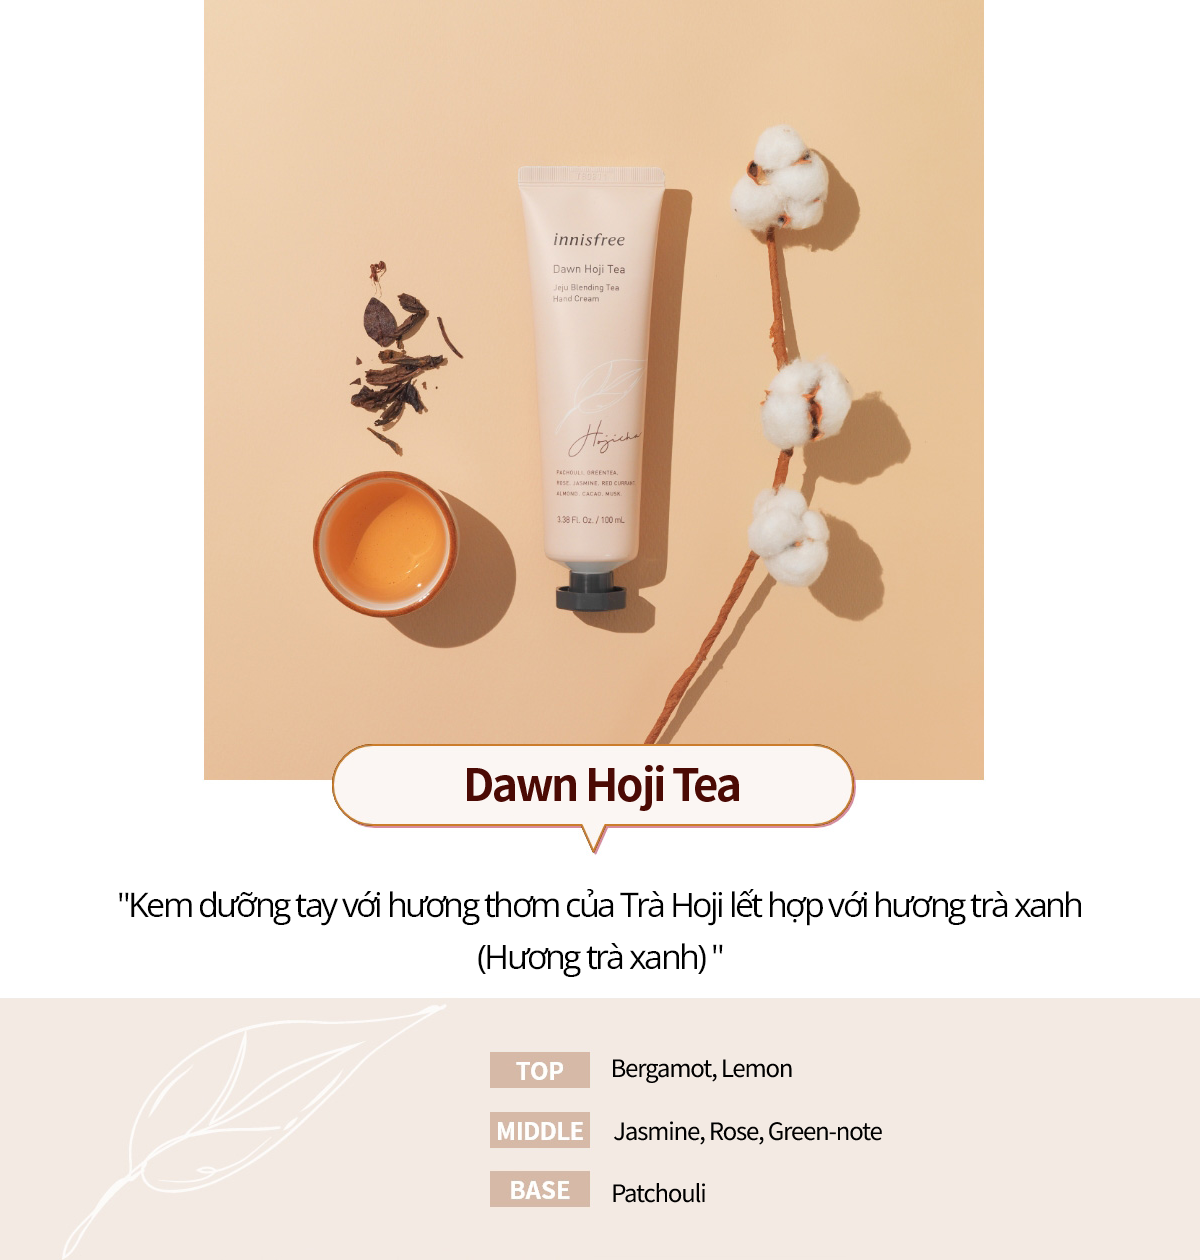 Innisfree Jeju Blending Tea Hand Cream Hoji Tea of Dawn